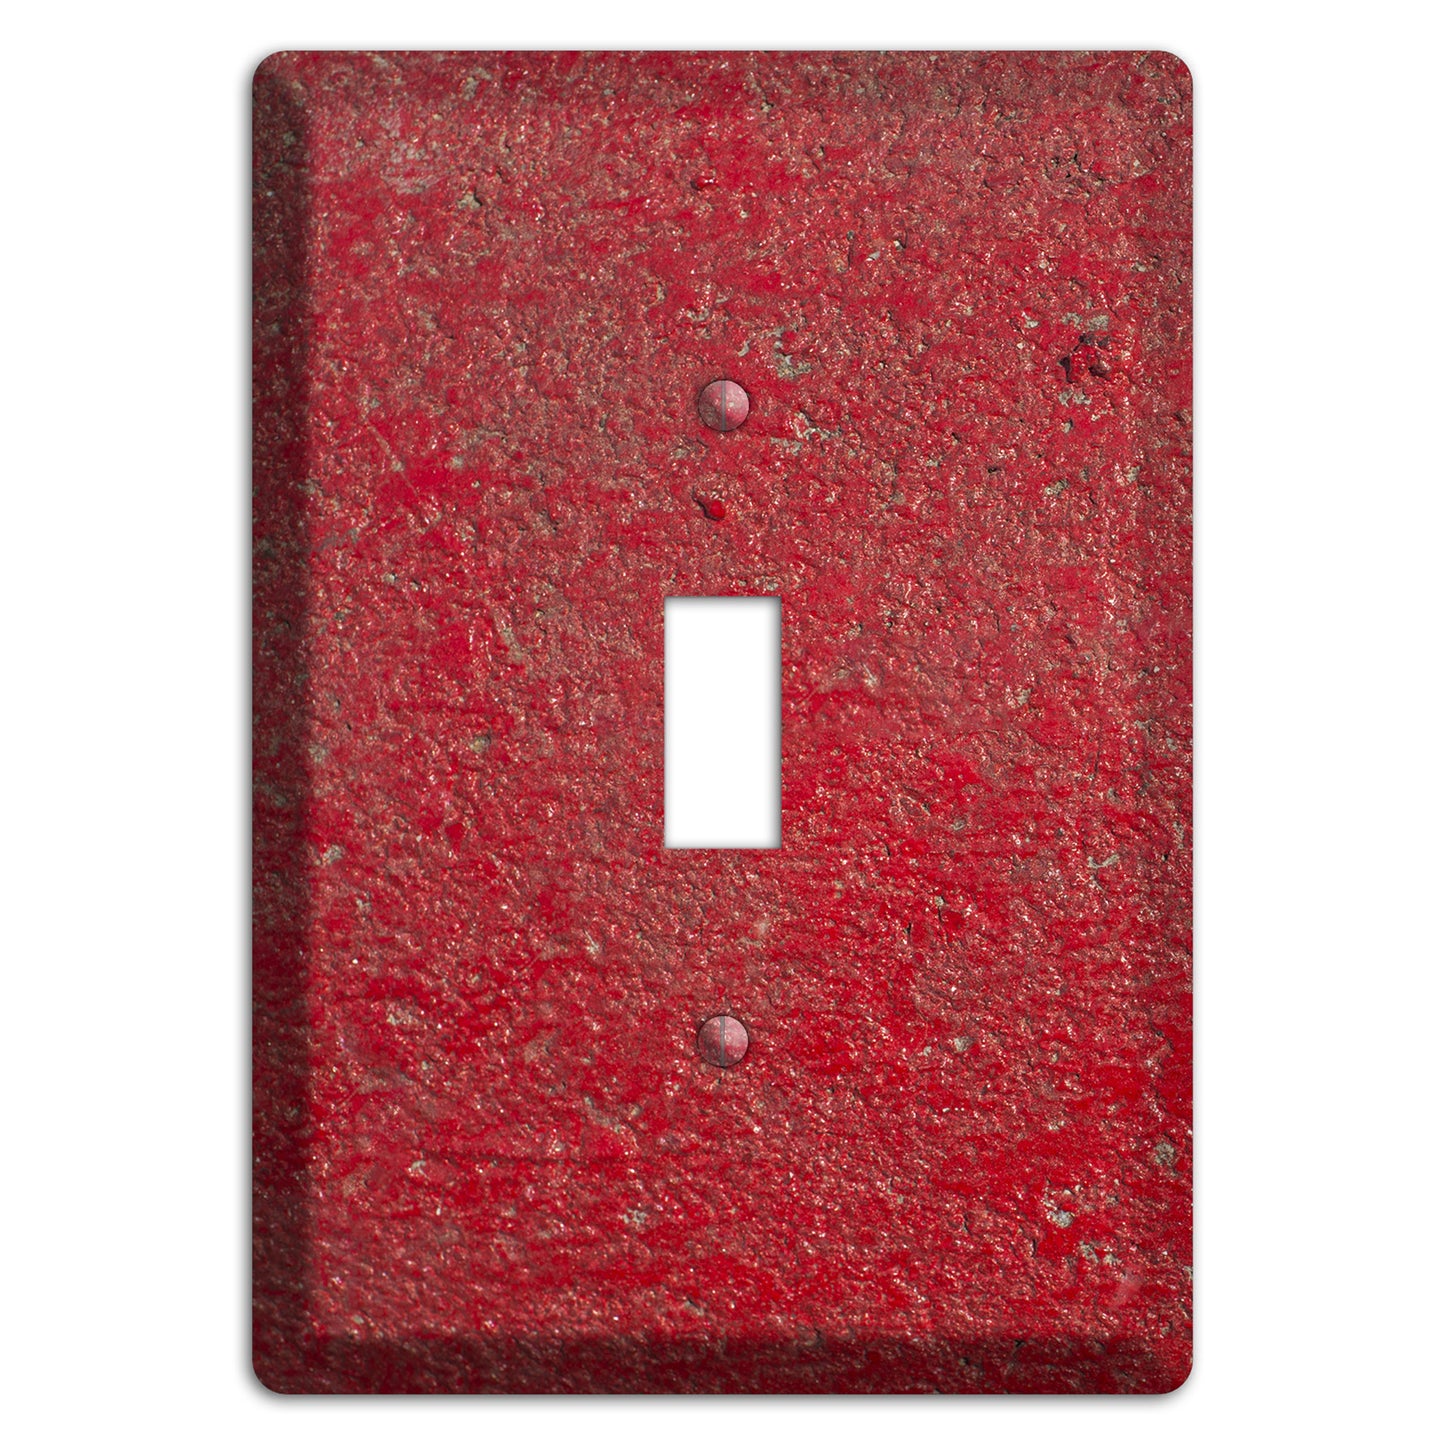 Red Concrete Cover Plates